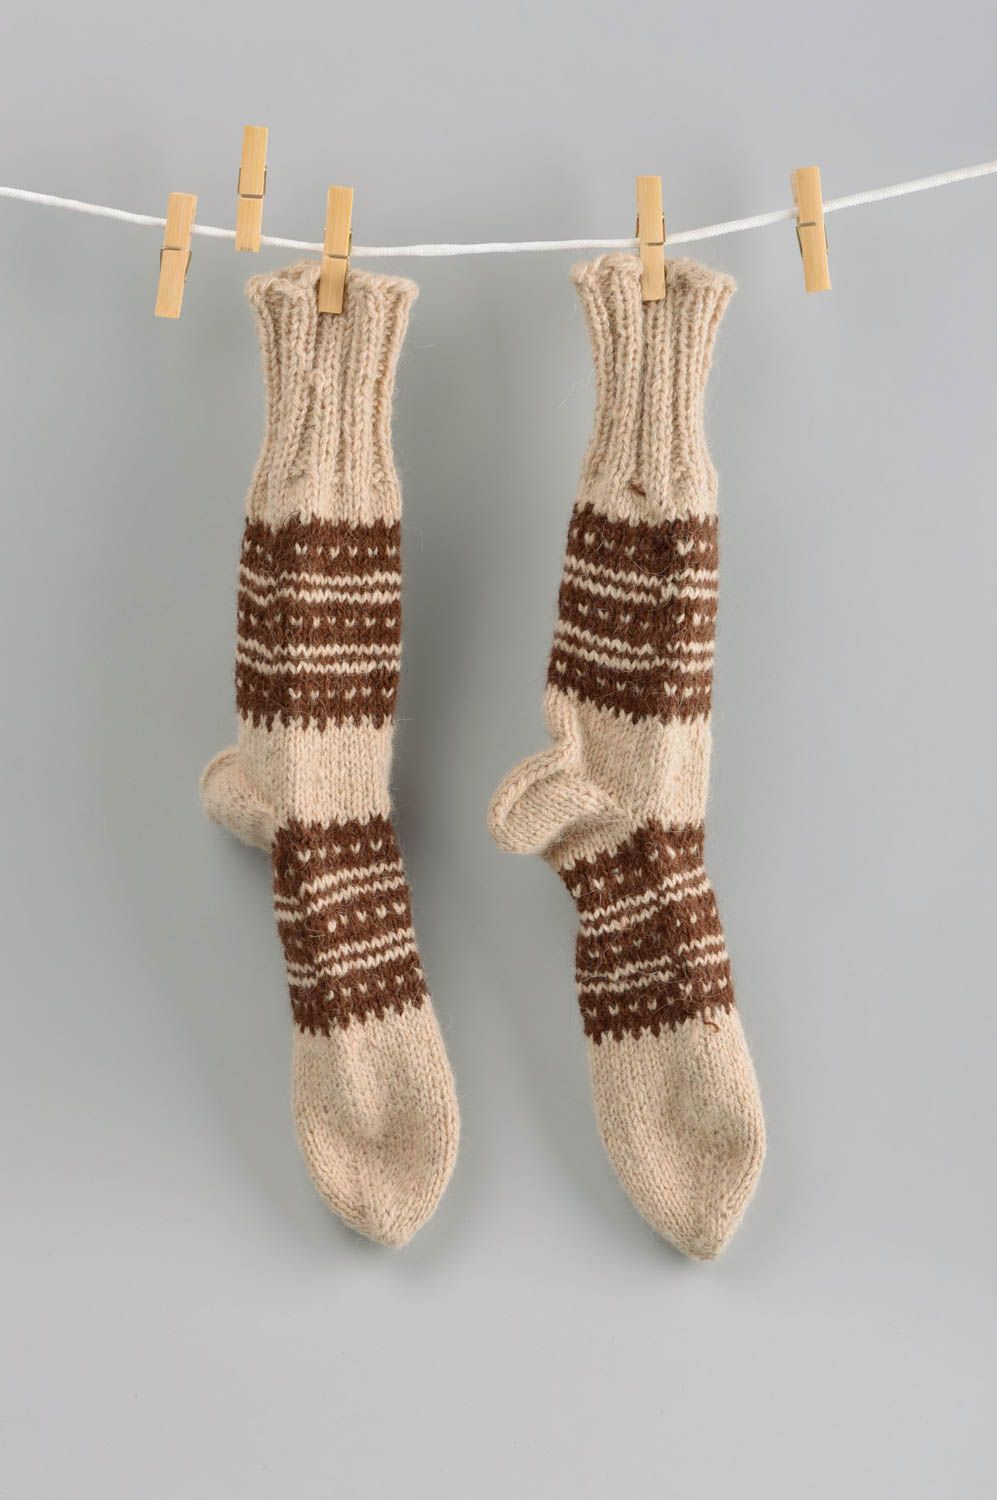 Handmade woolen winter socks unusual designer socks stylish warm accessory photo 1